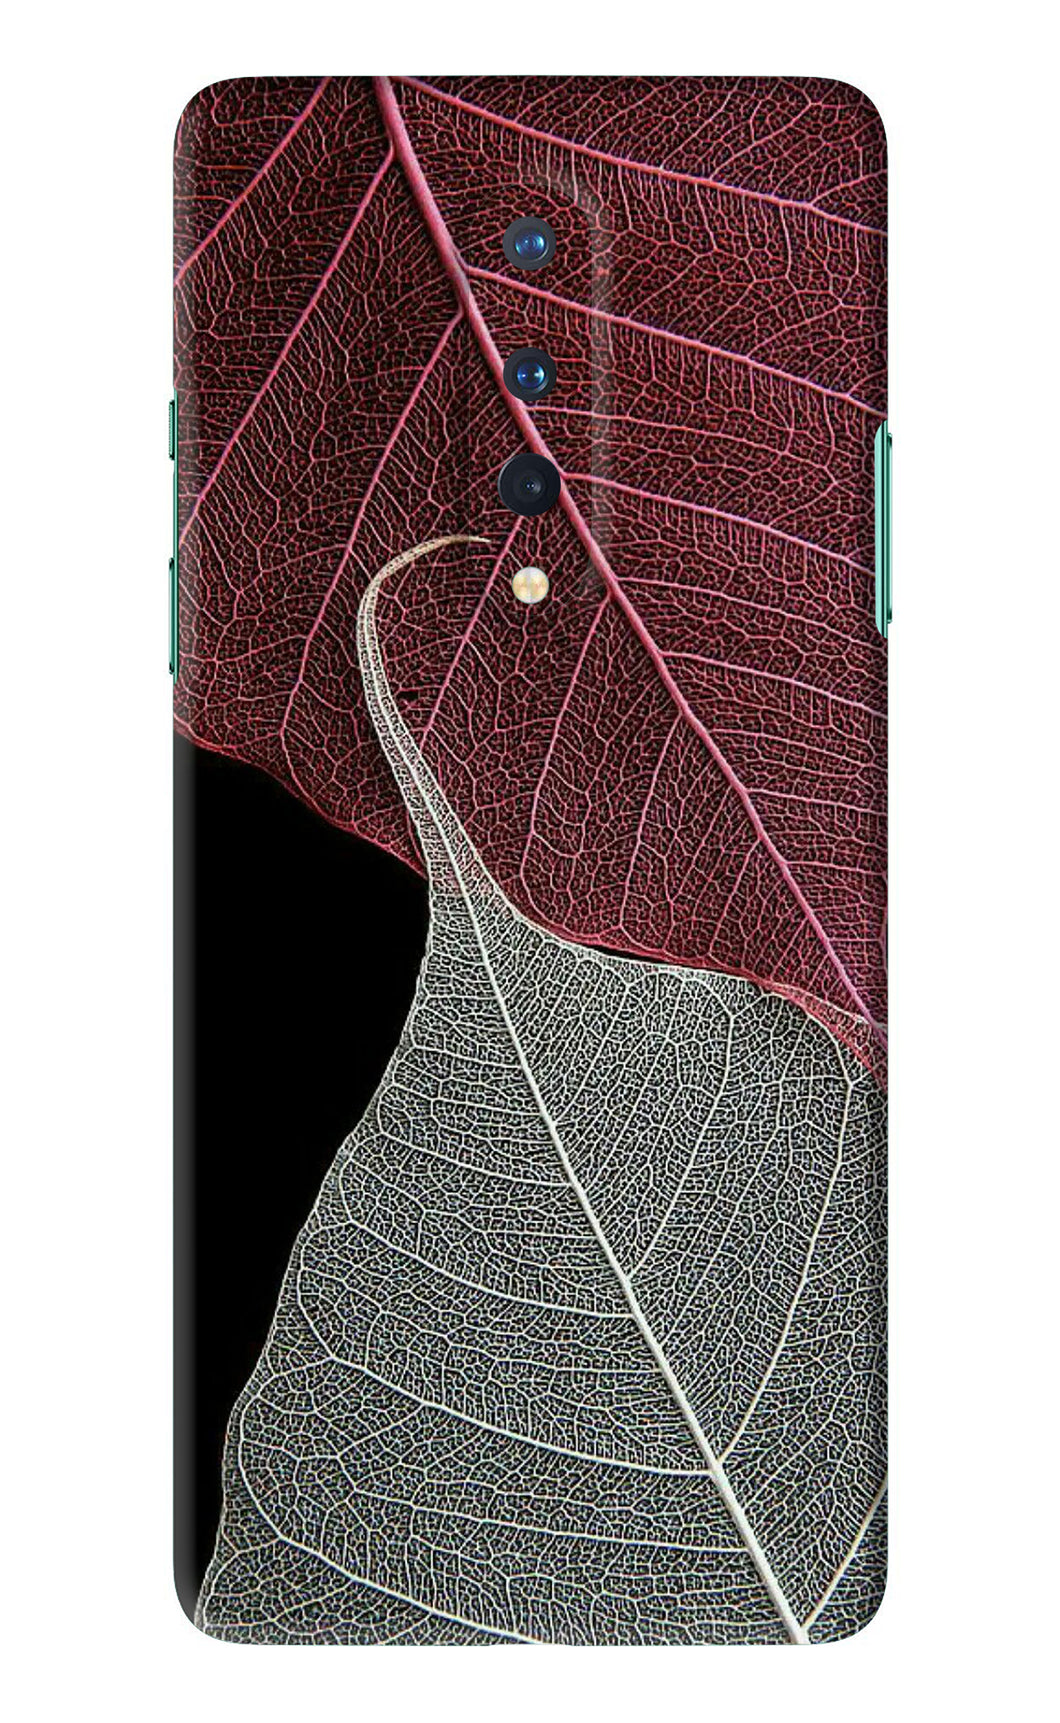 Leaf Pattern OnePlus 8 Back Skin Wrap